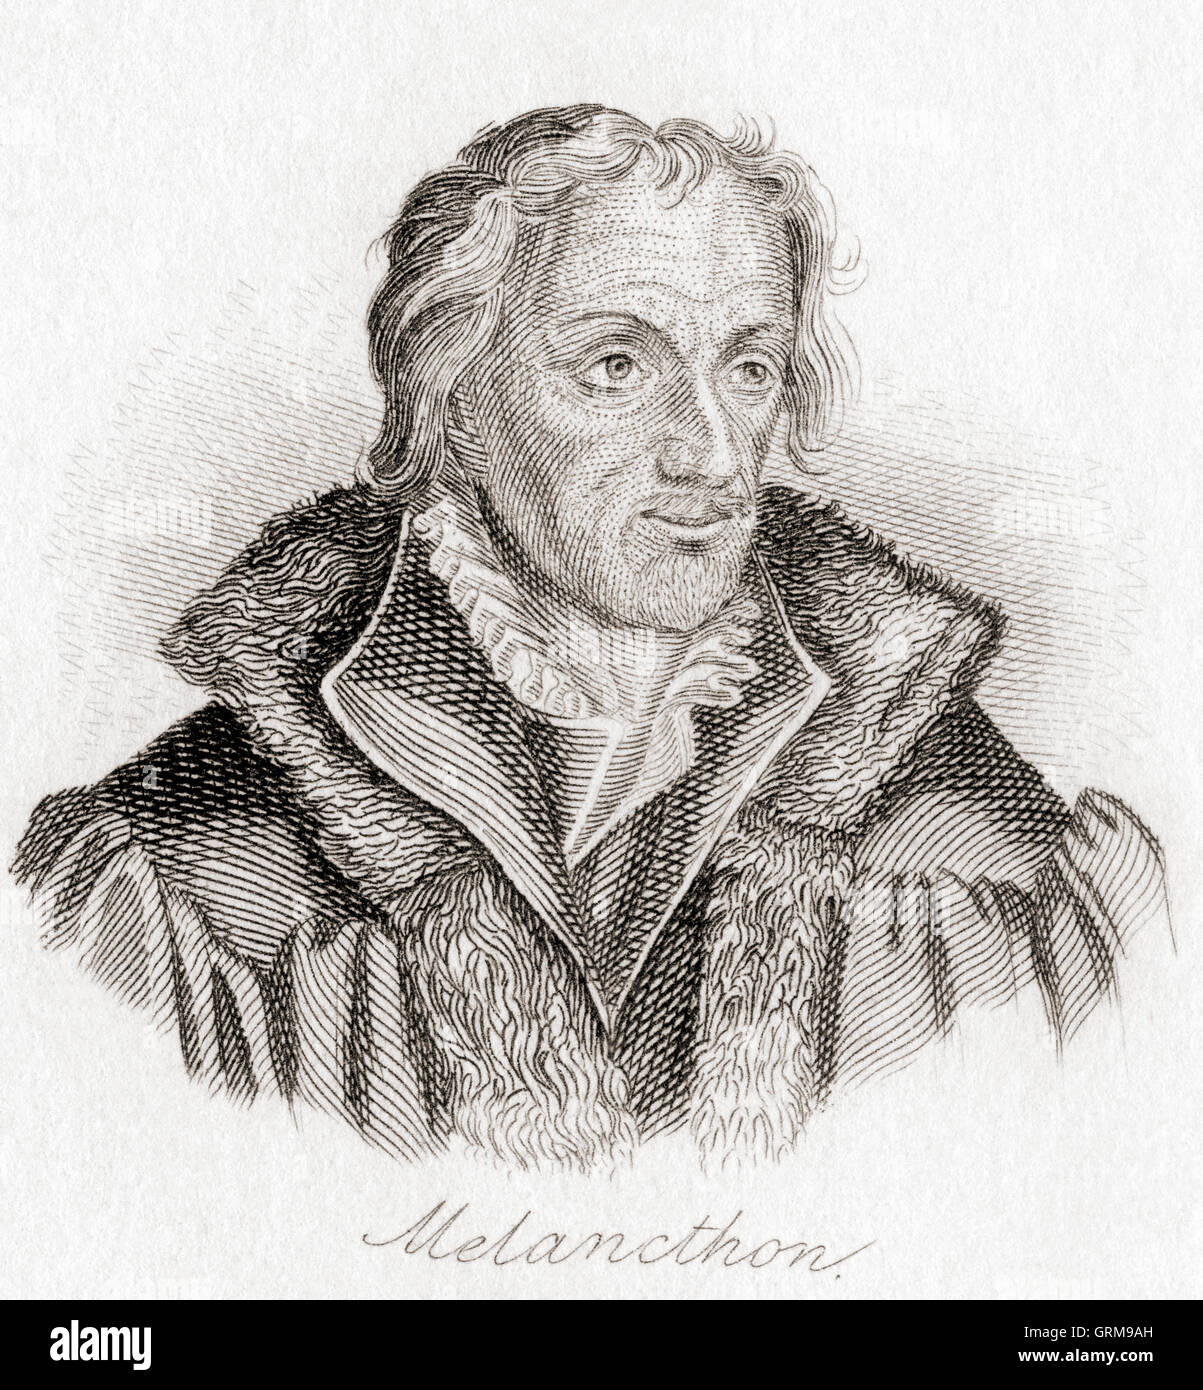 Filippo Melantone, 1497 - 1560, nato Philipp Schwartzerdt. Autore tedesco, riformatore umanista e teologo ed educatore. Foto Stock